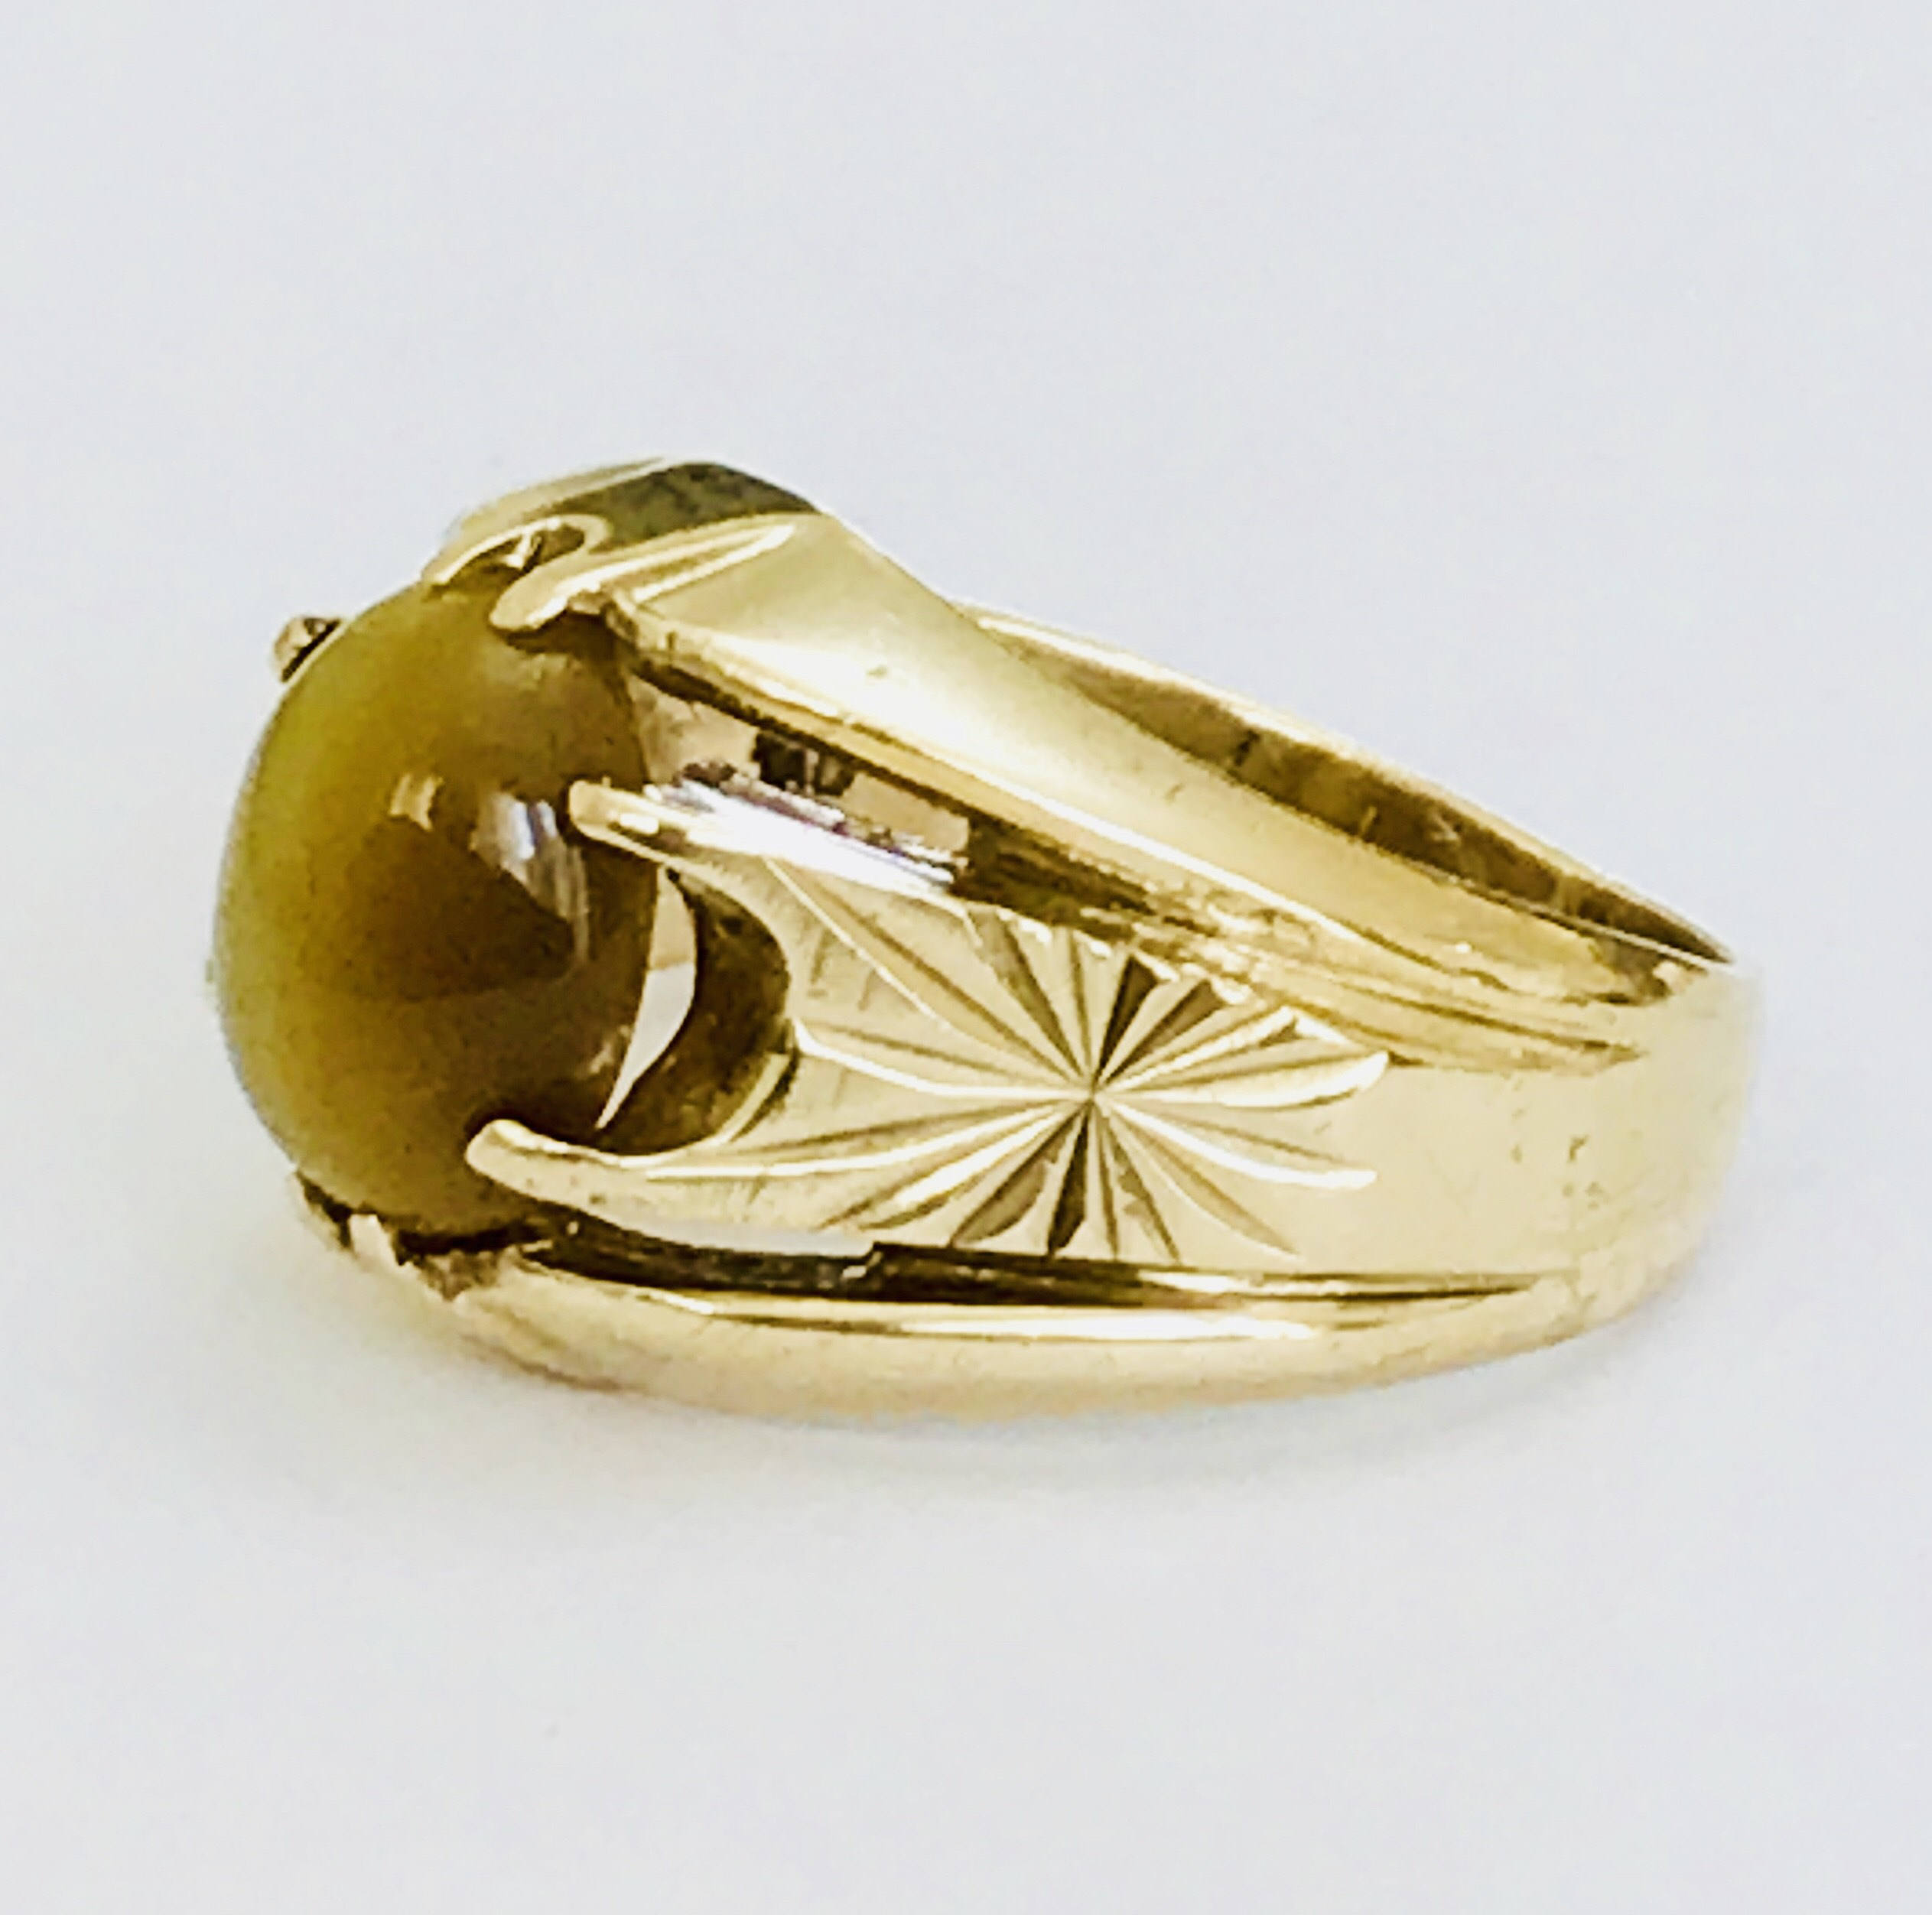 Stunning vintage 9ct yellow gold Tigers Eye signet ring - hallmarked ...